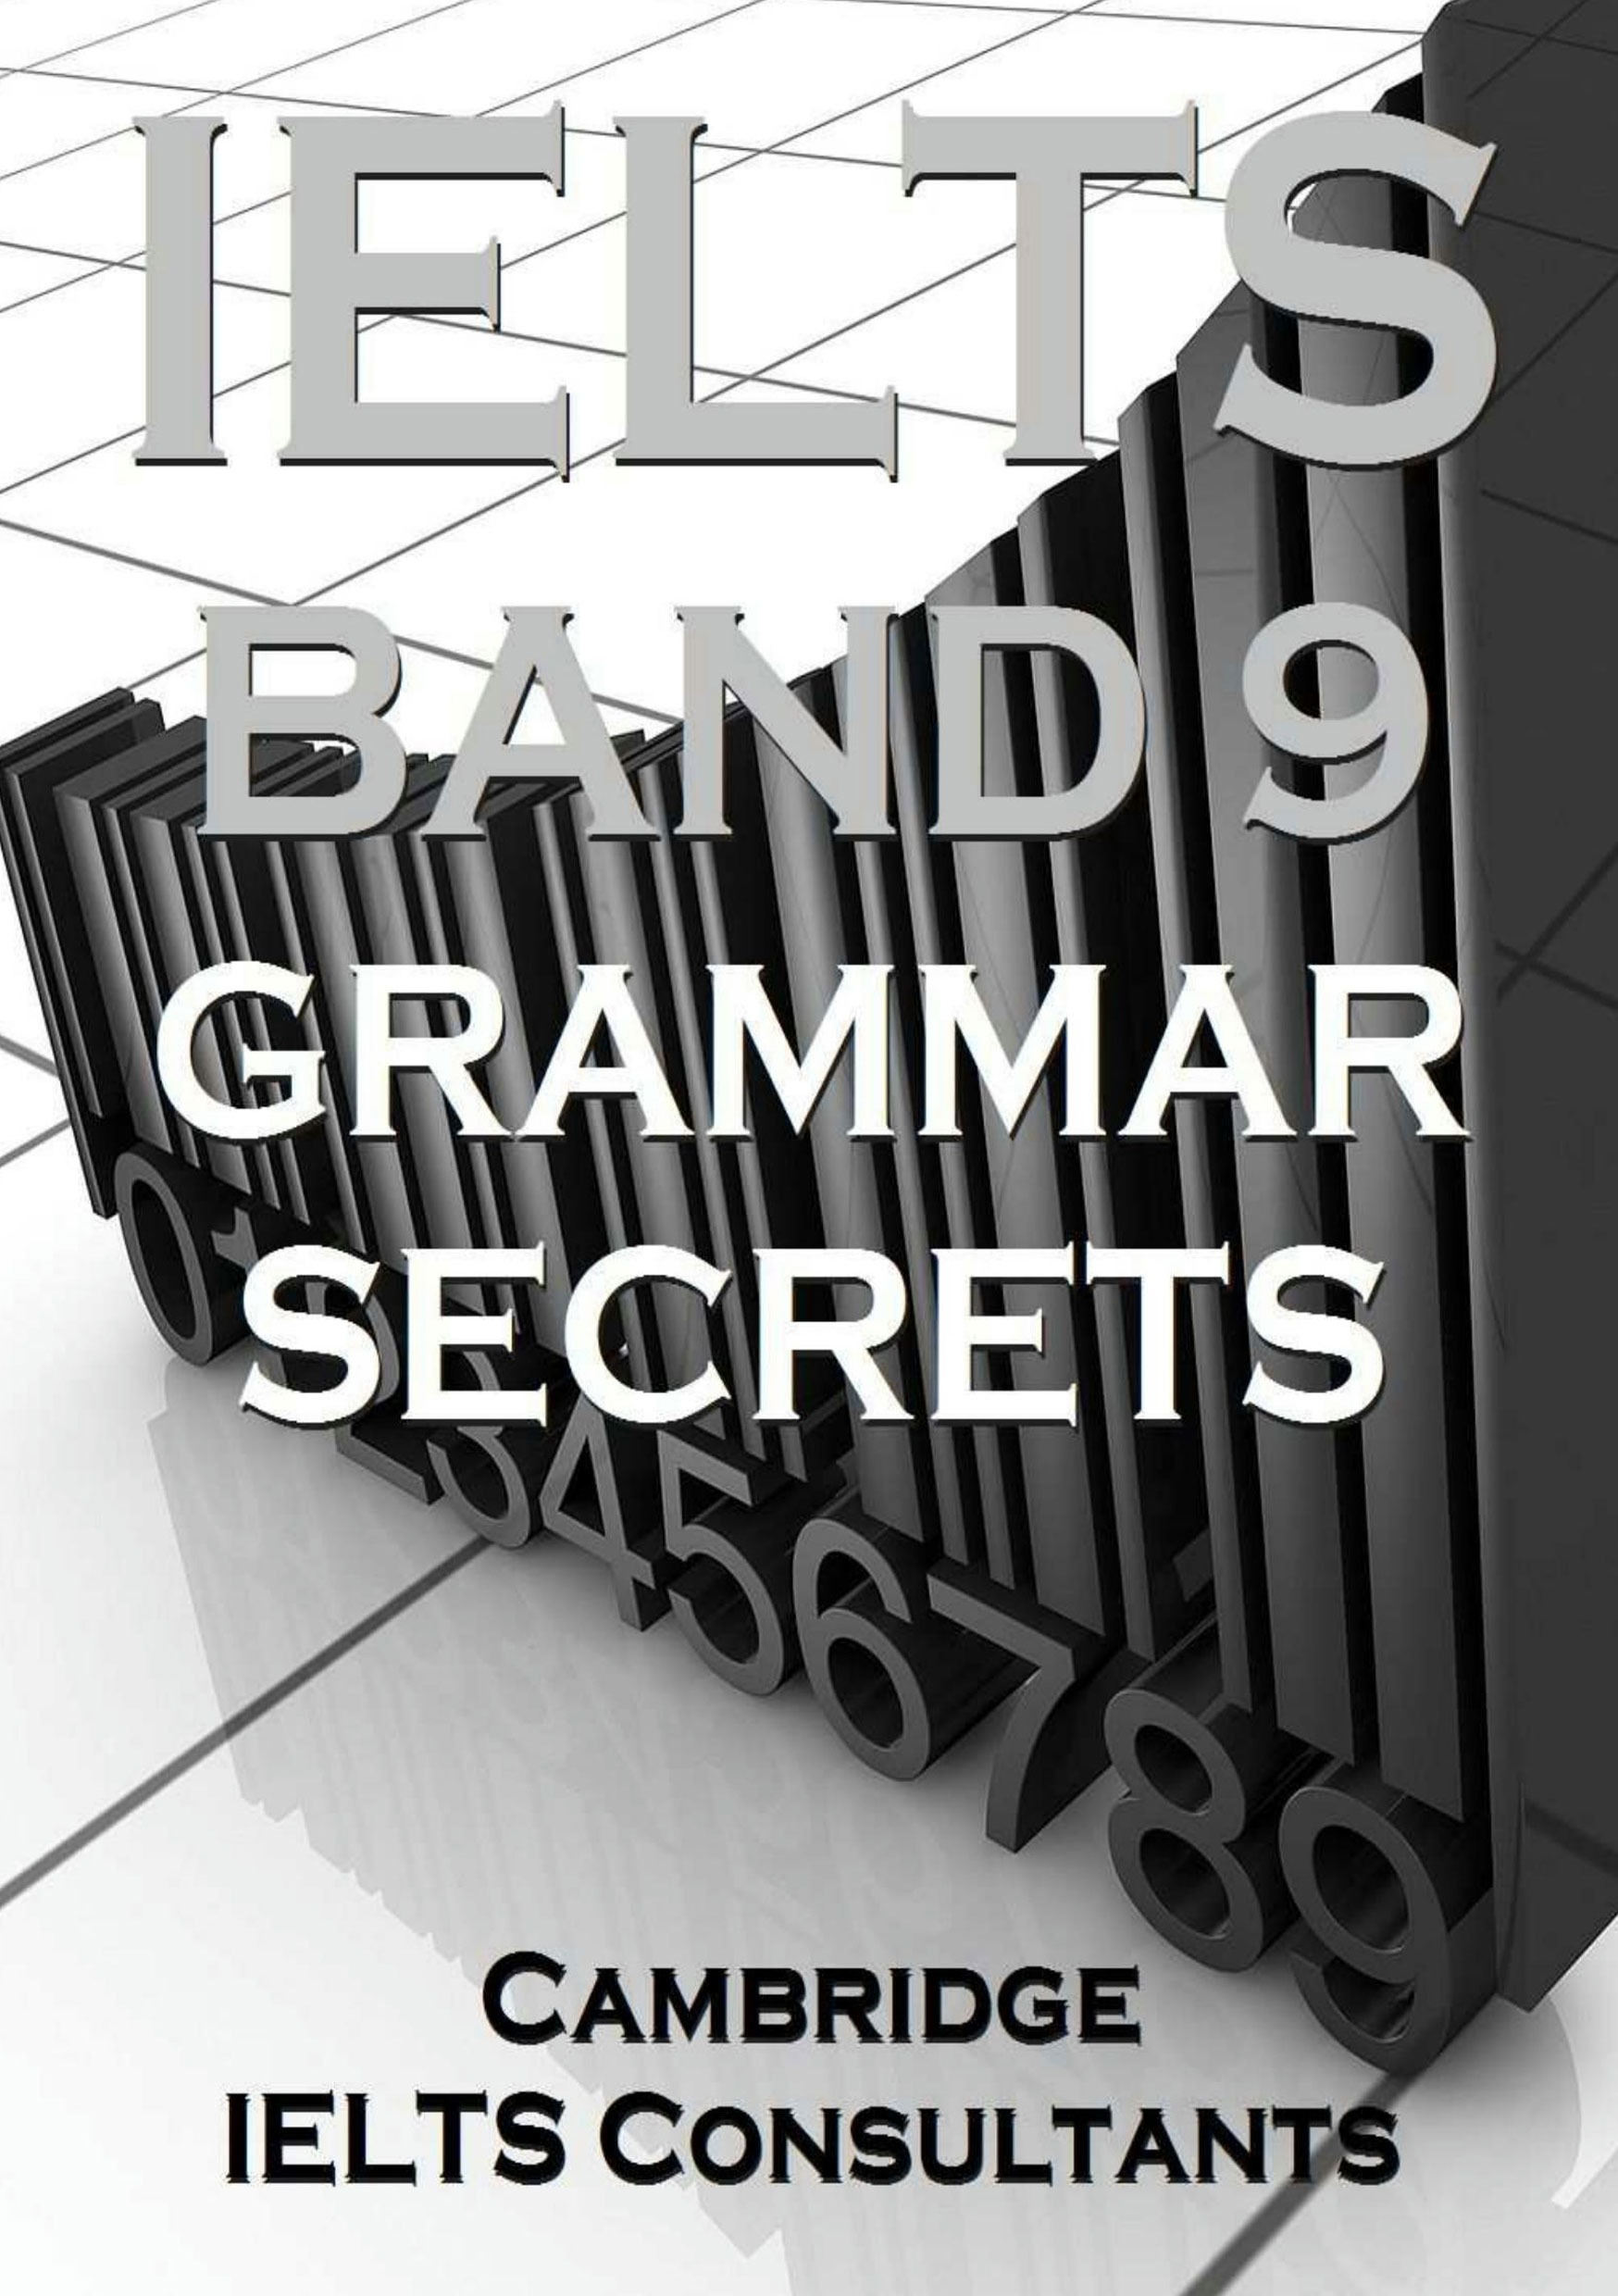 Get IELTS Band 9 Grammar Secrets